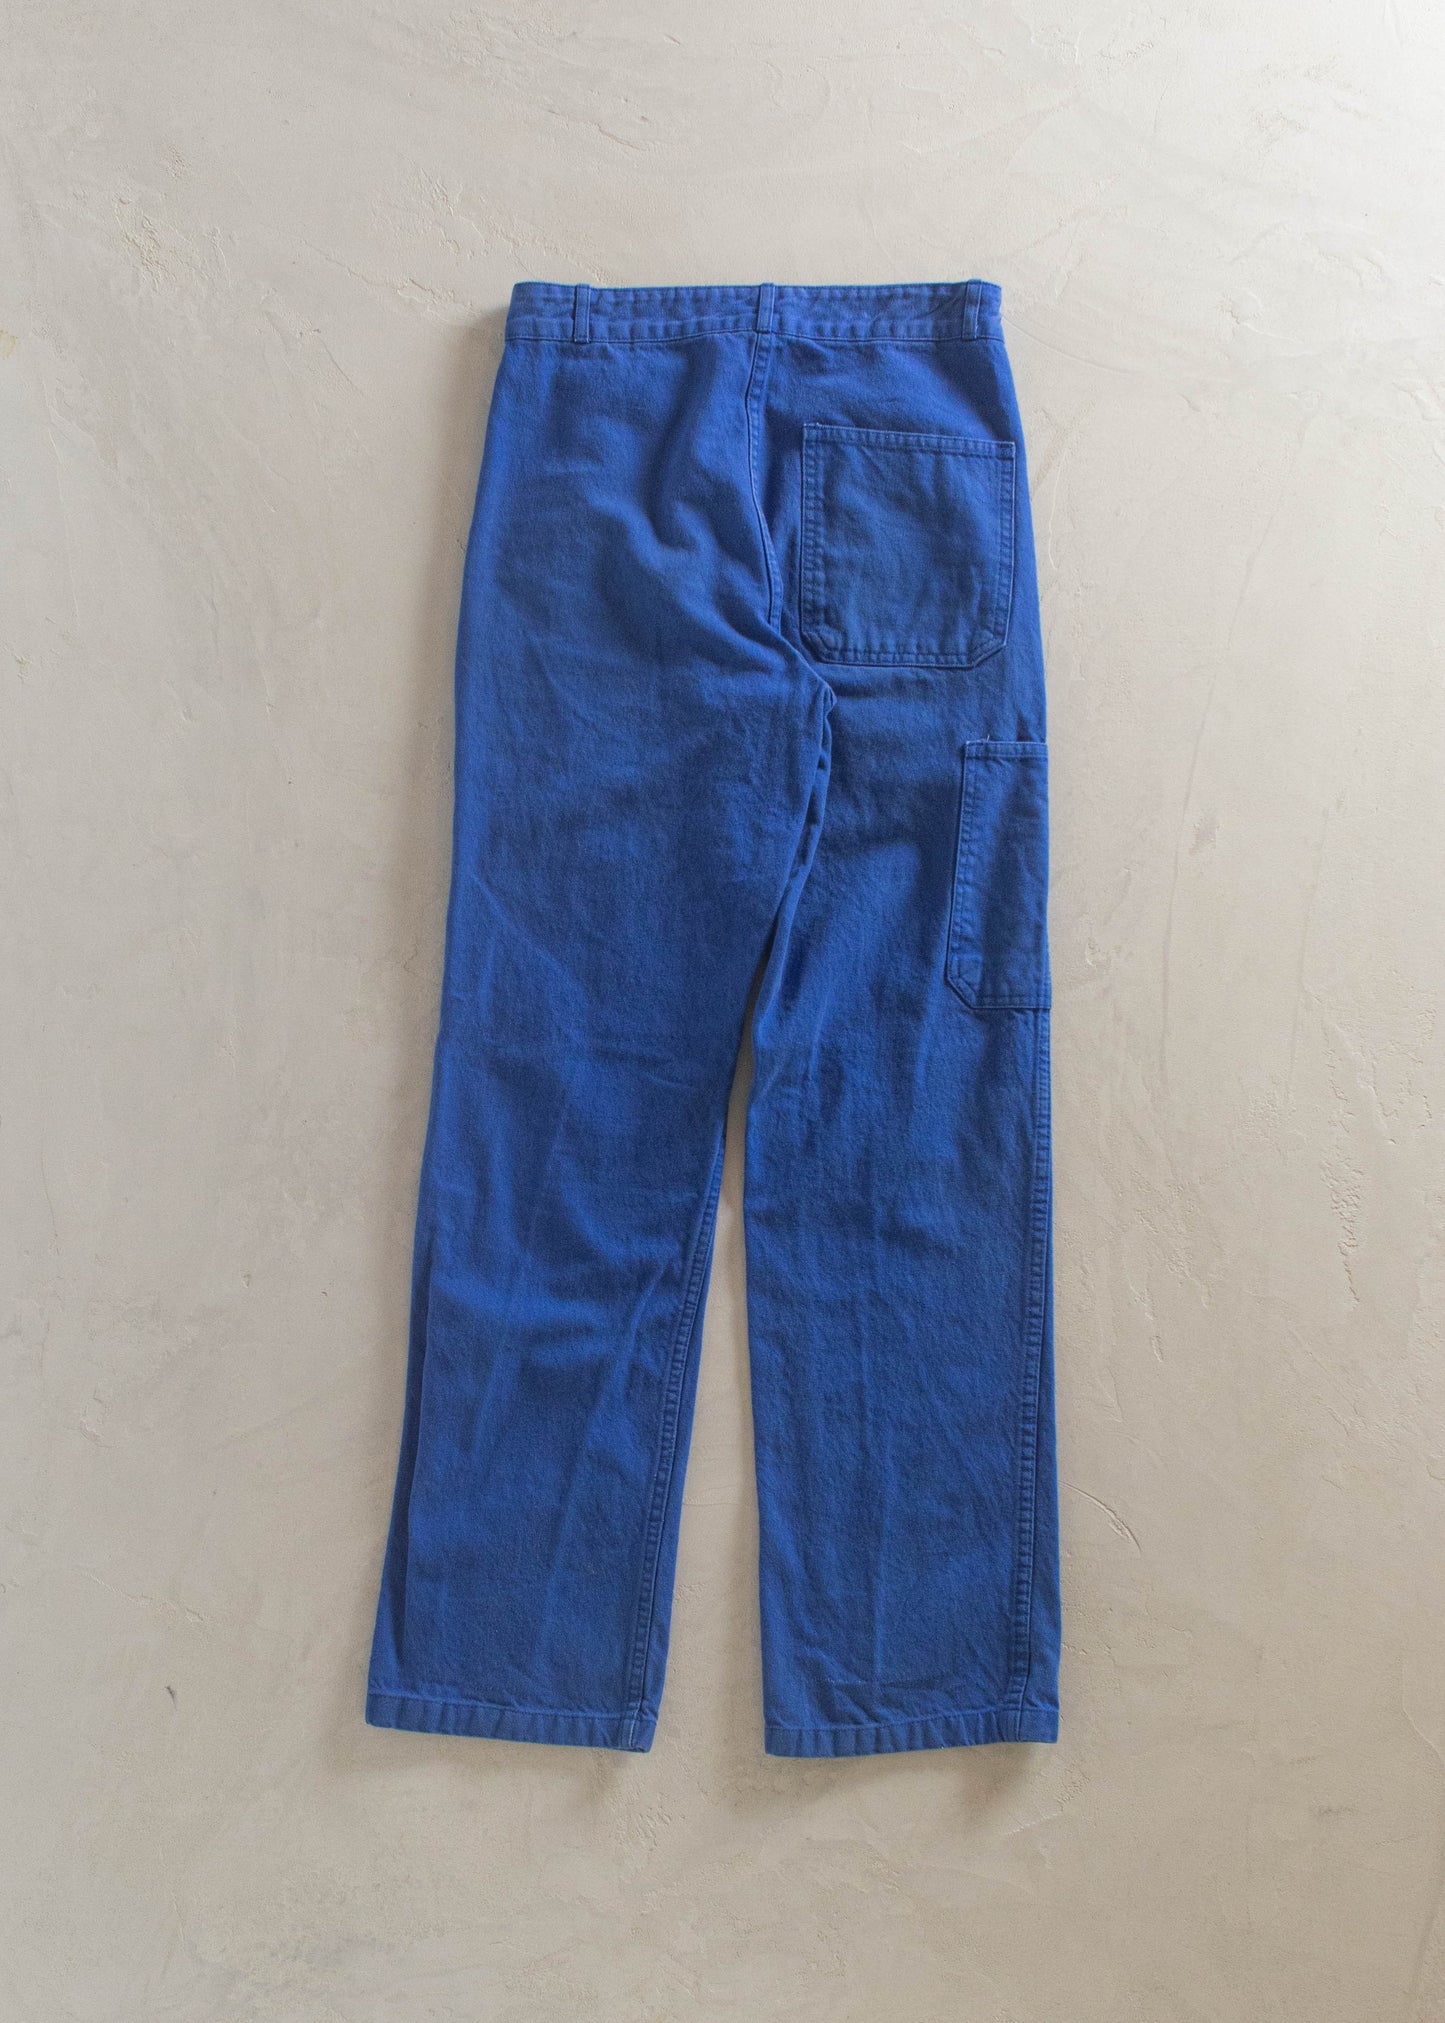 1980s French Workwear Chore Pants Size Women's 27 Men's 30